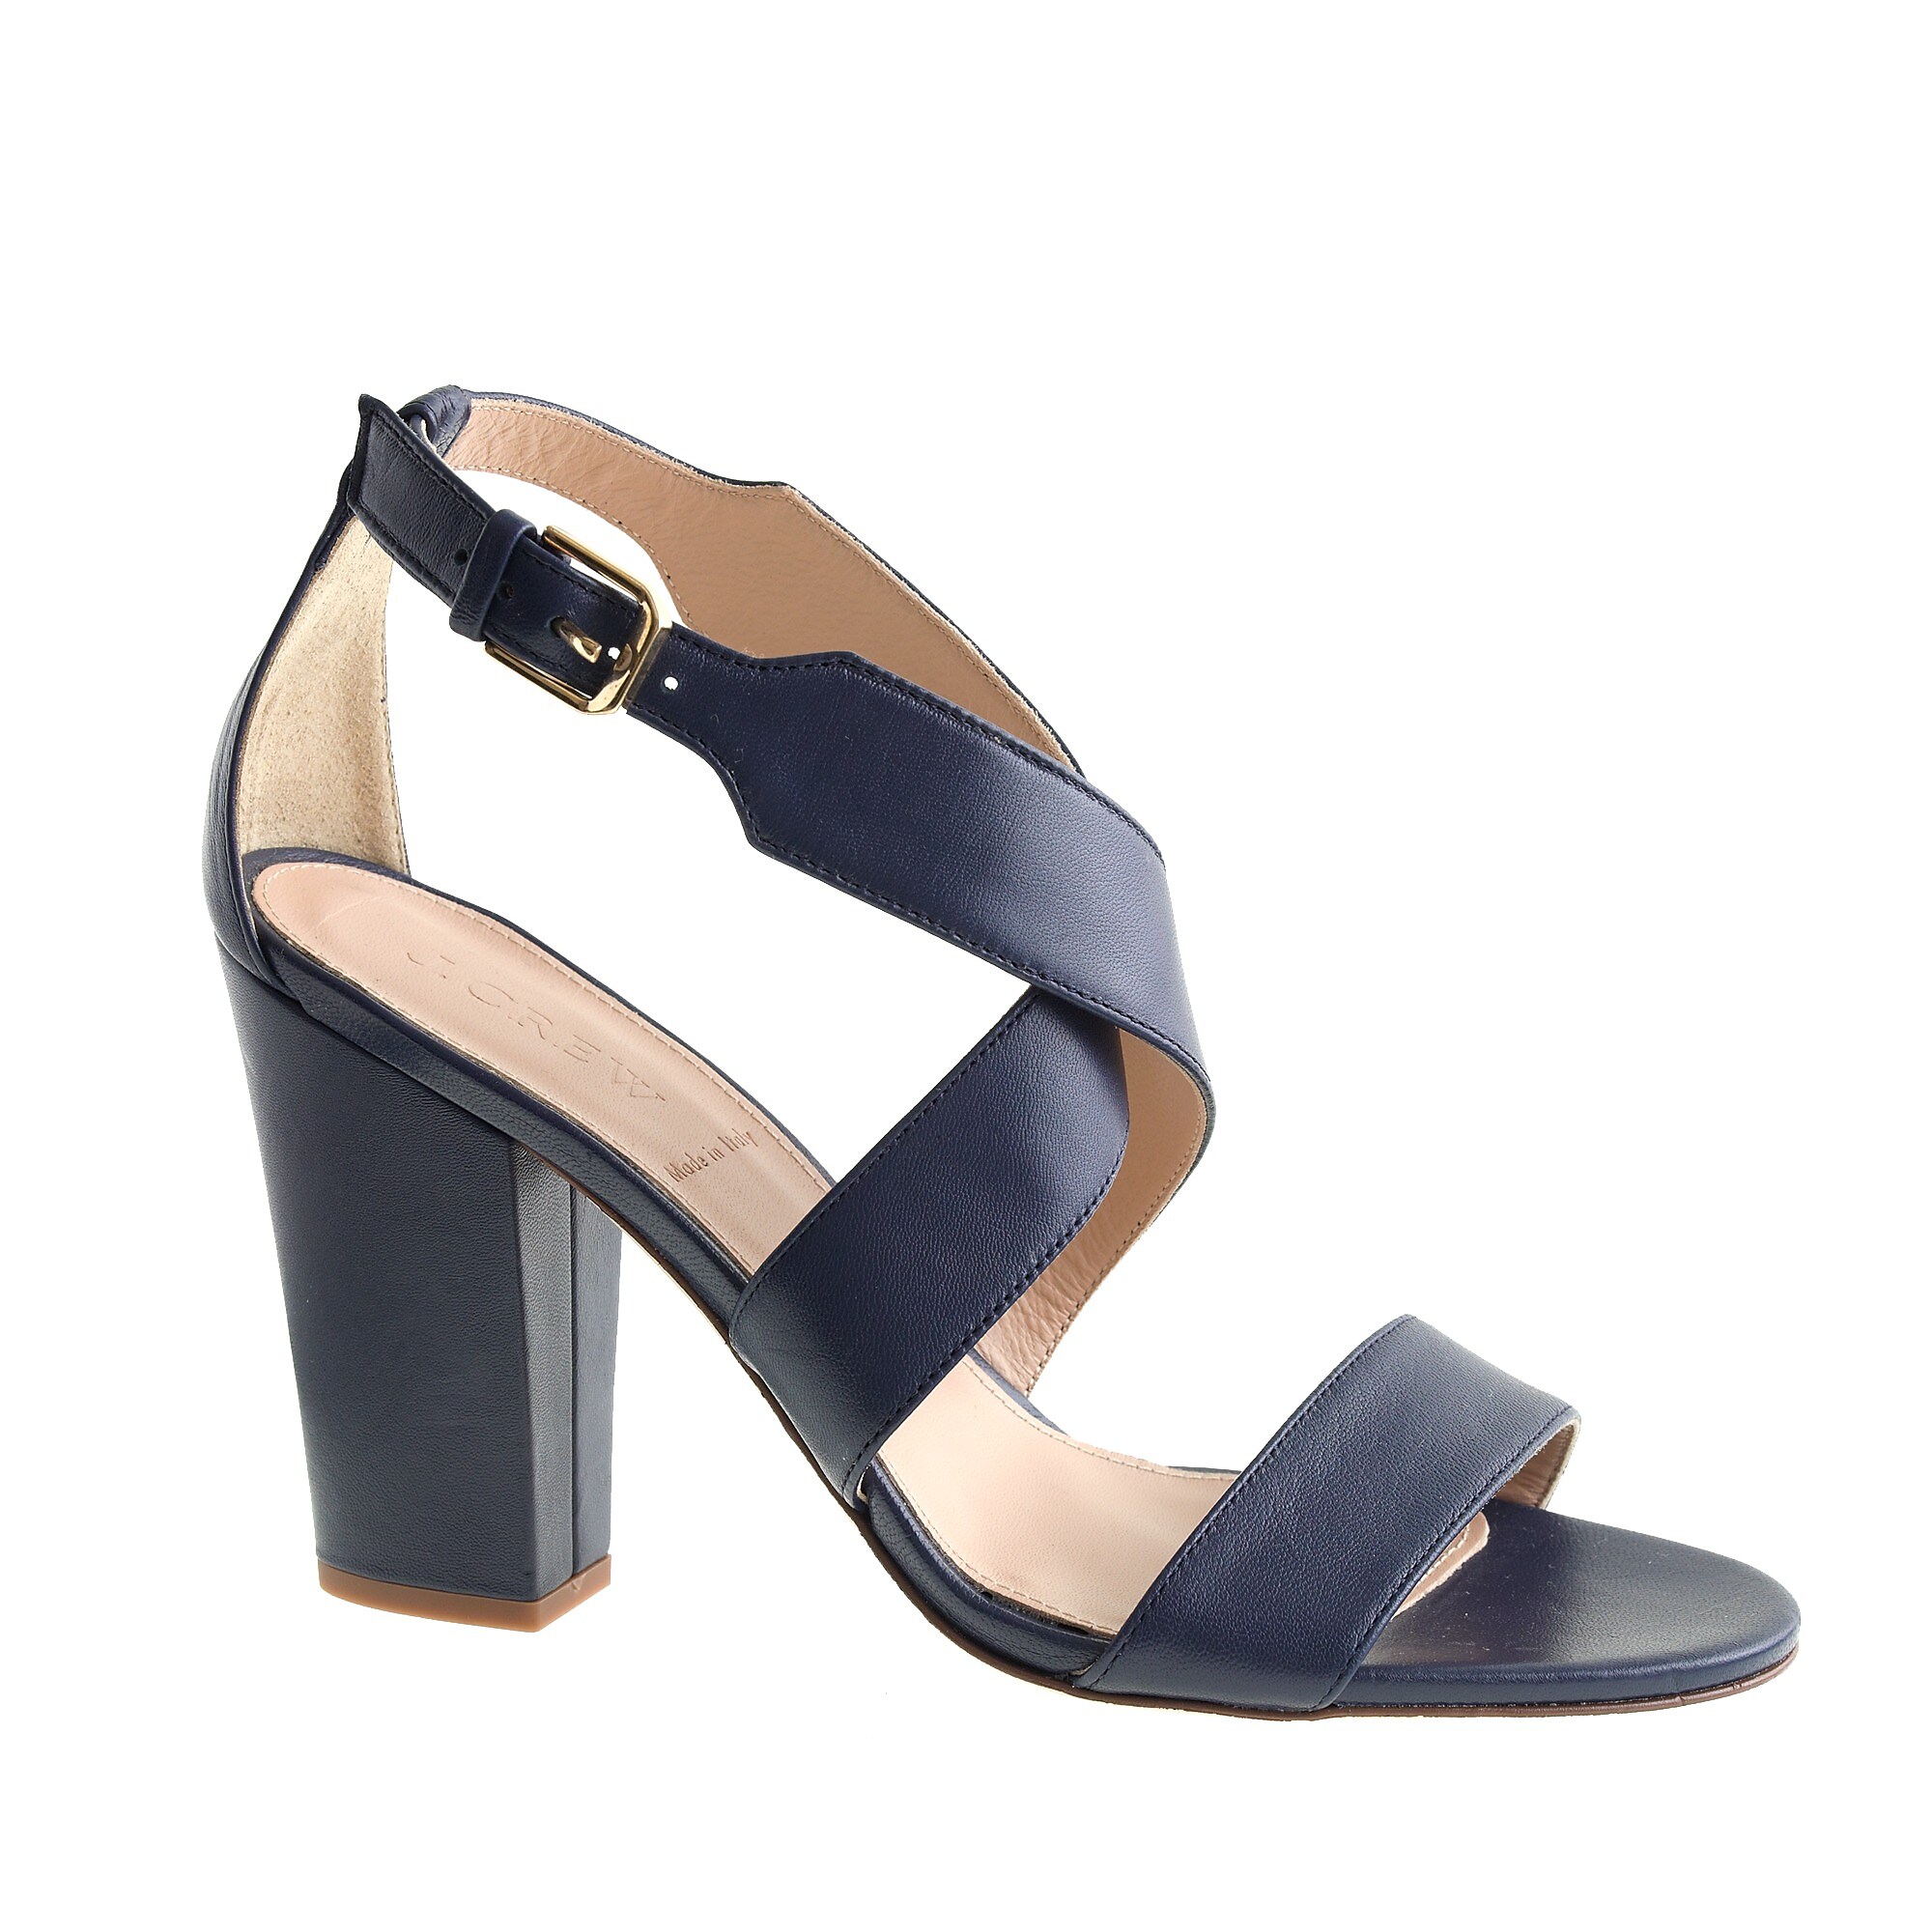 Callie high-heel sandals : Women sandals | J.Crew